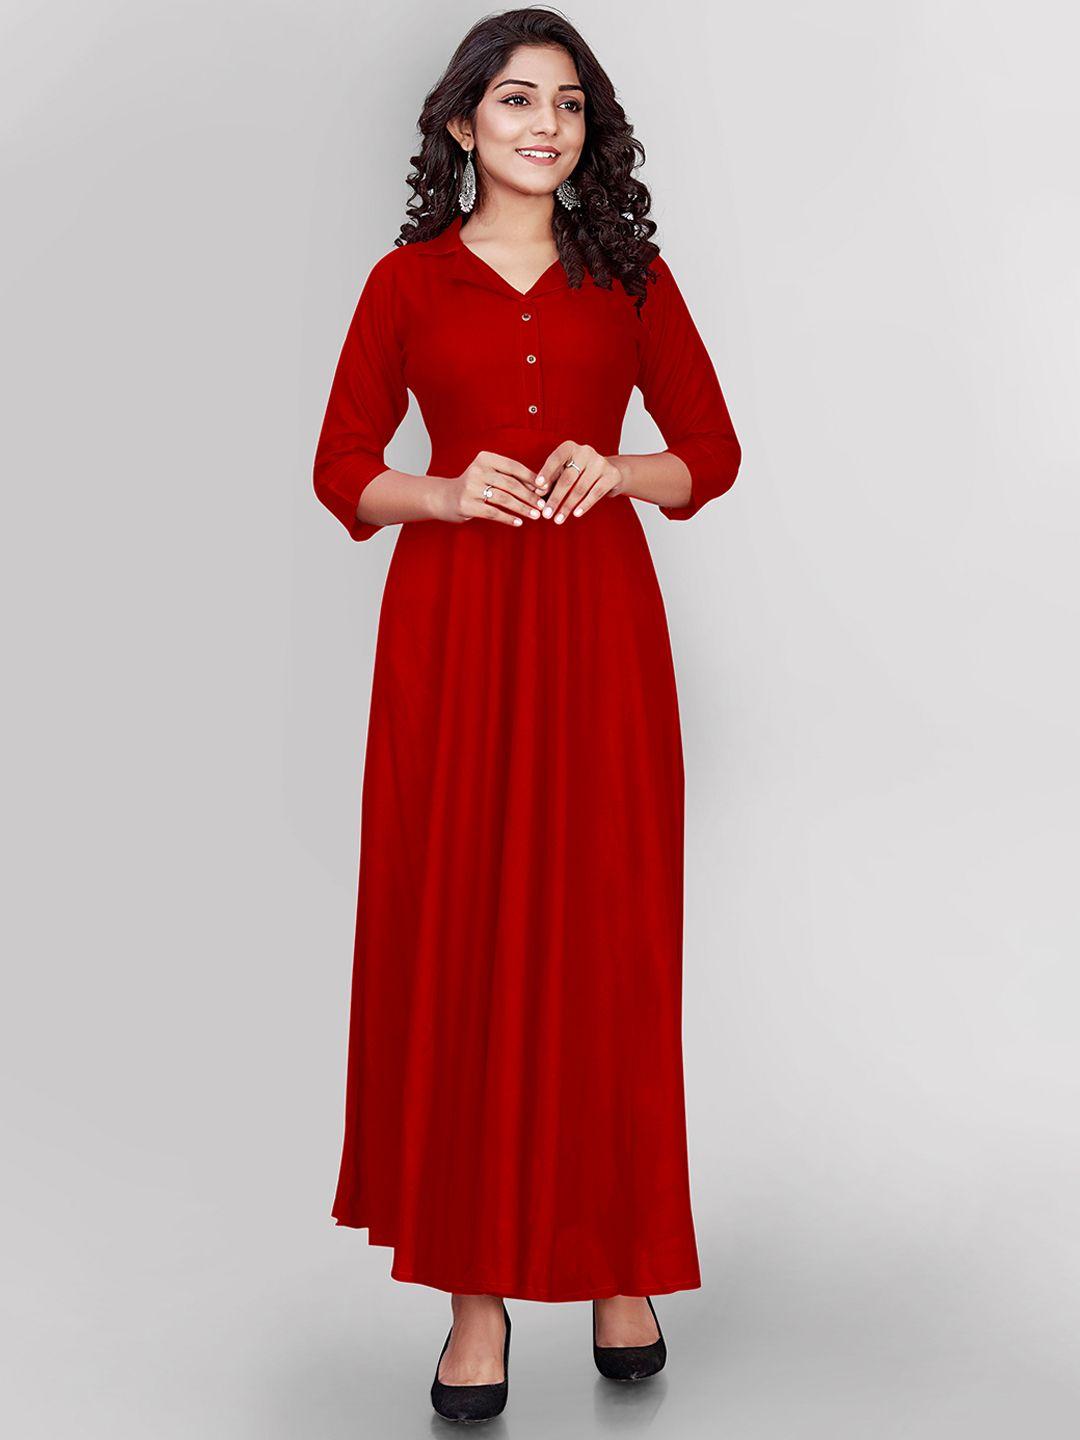 globon impex red ethnic maxi dress